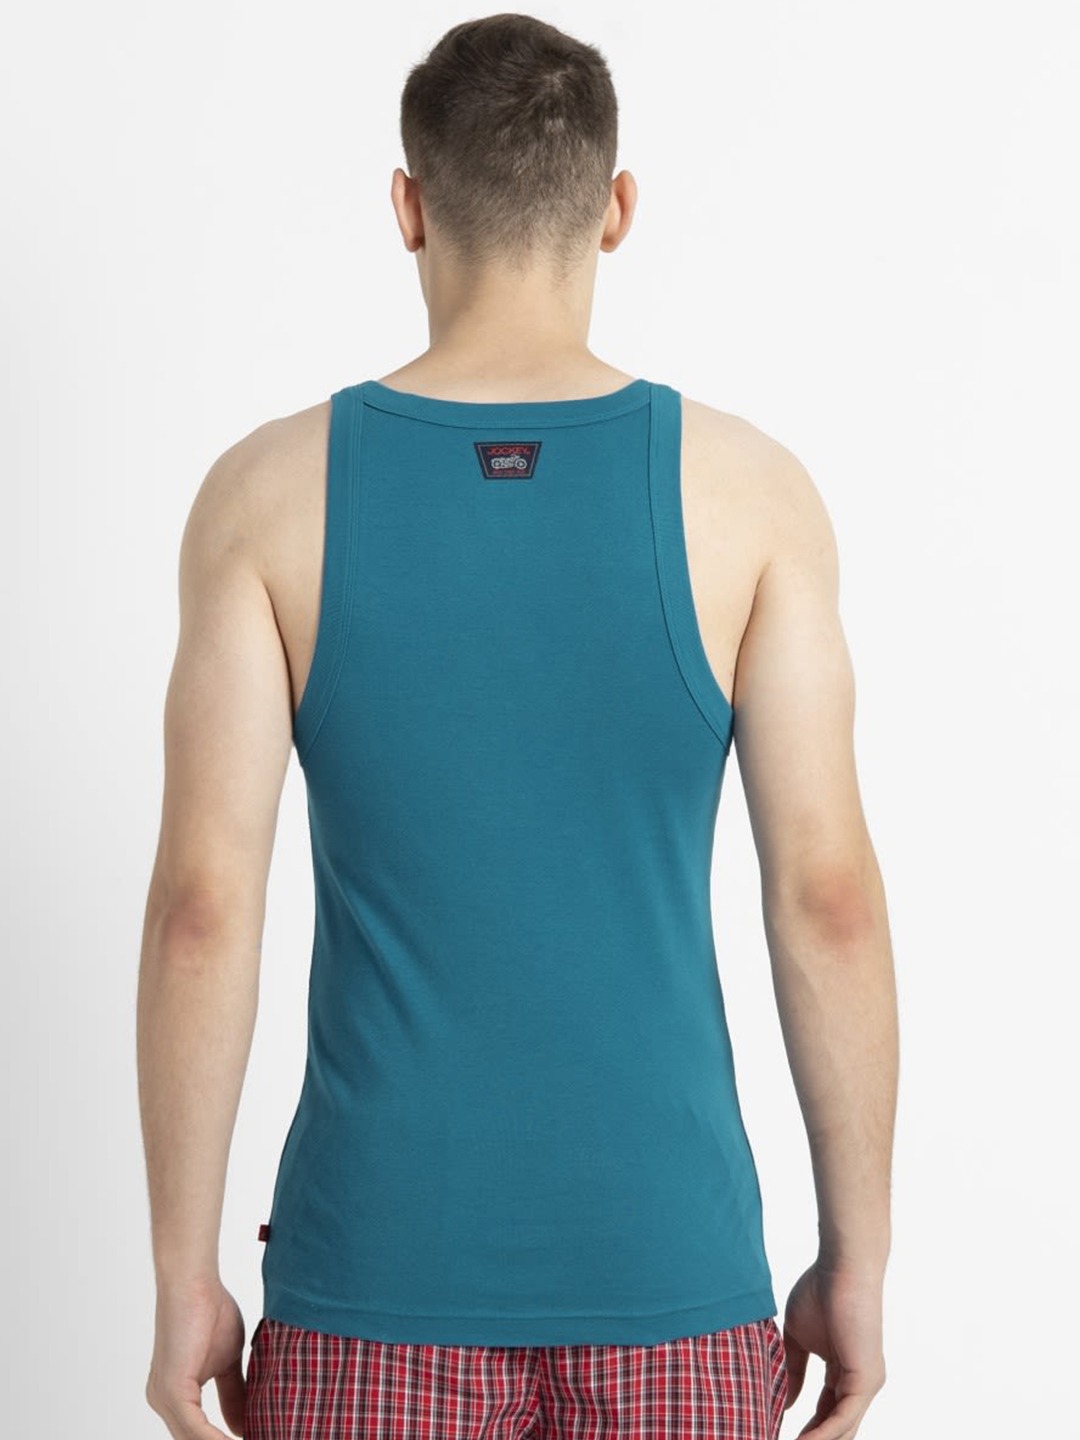 Clothing Innerwear Vests | Jockey Men Teal Blue Solid Square Neck Innerwear Vest US26-0105 - PQ80462